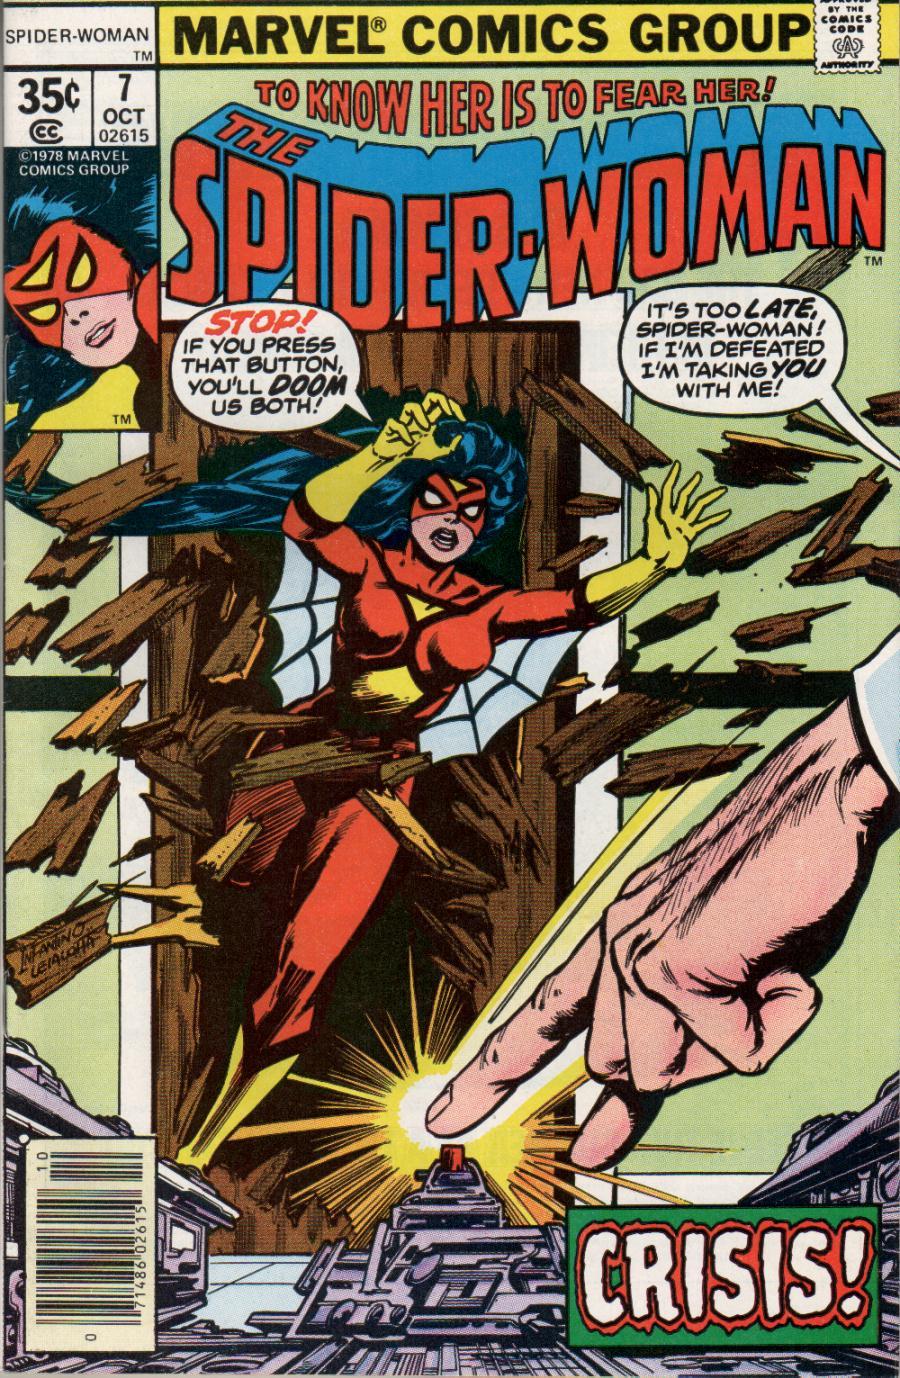 Spider-Woman Vol. 1 #7